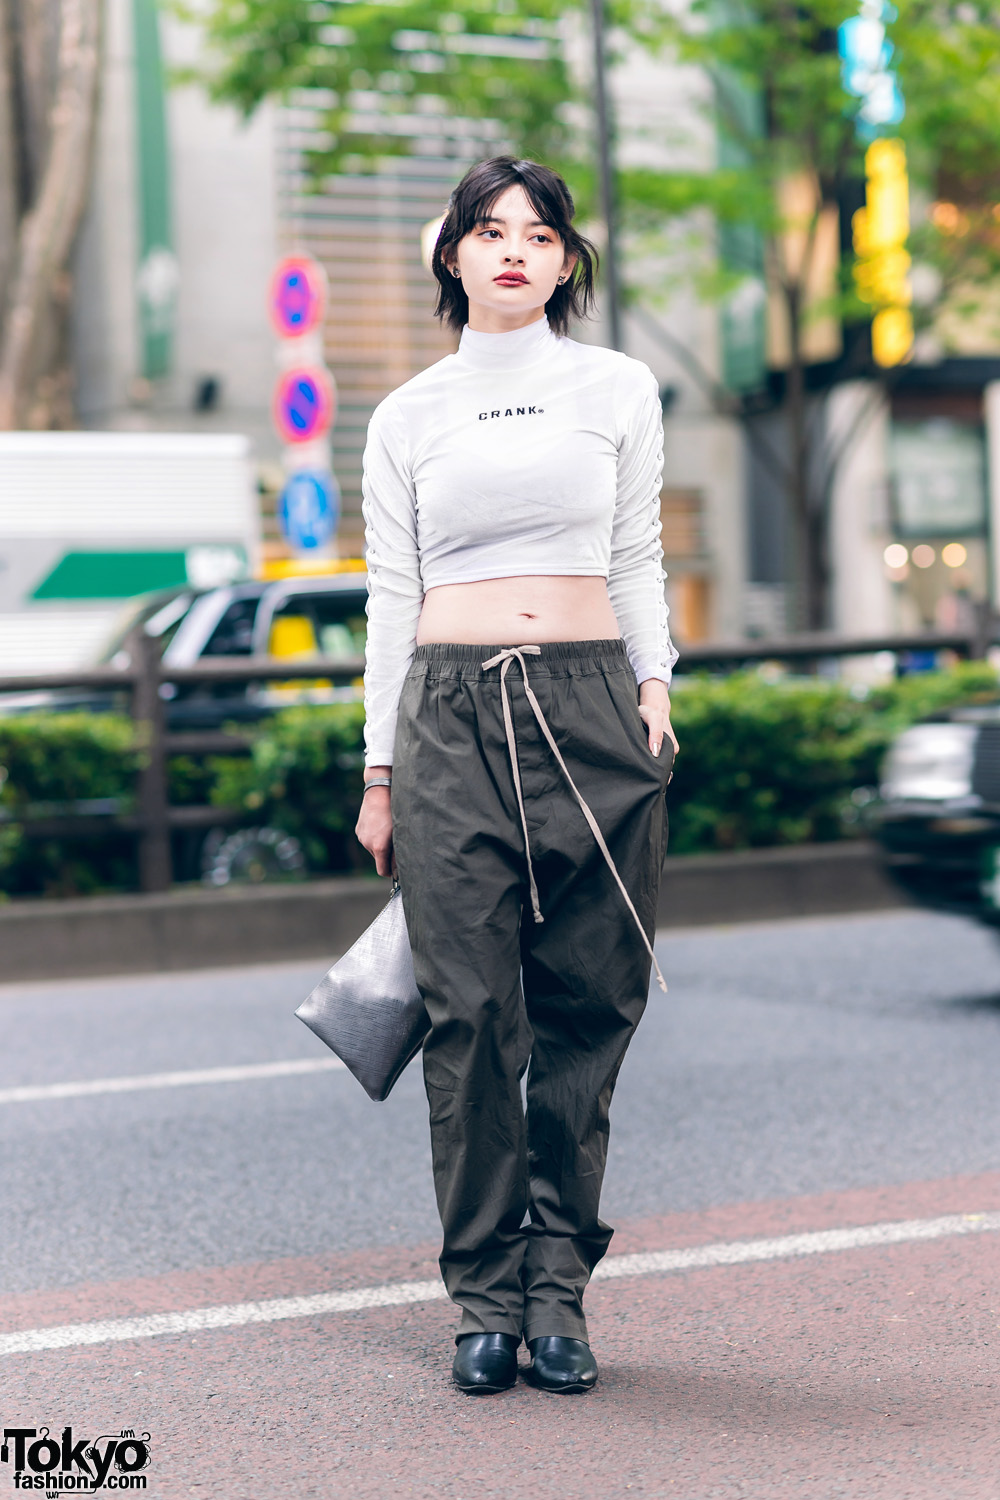 Harajuku Model's Monochrome Street Fashion w/ Crank Cropped Top, Rick Owens Drawstring Pants, Gum Metallic Wristlet, Tokyo Human Experiments & Pointy Boots